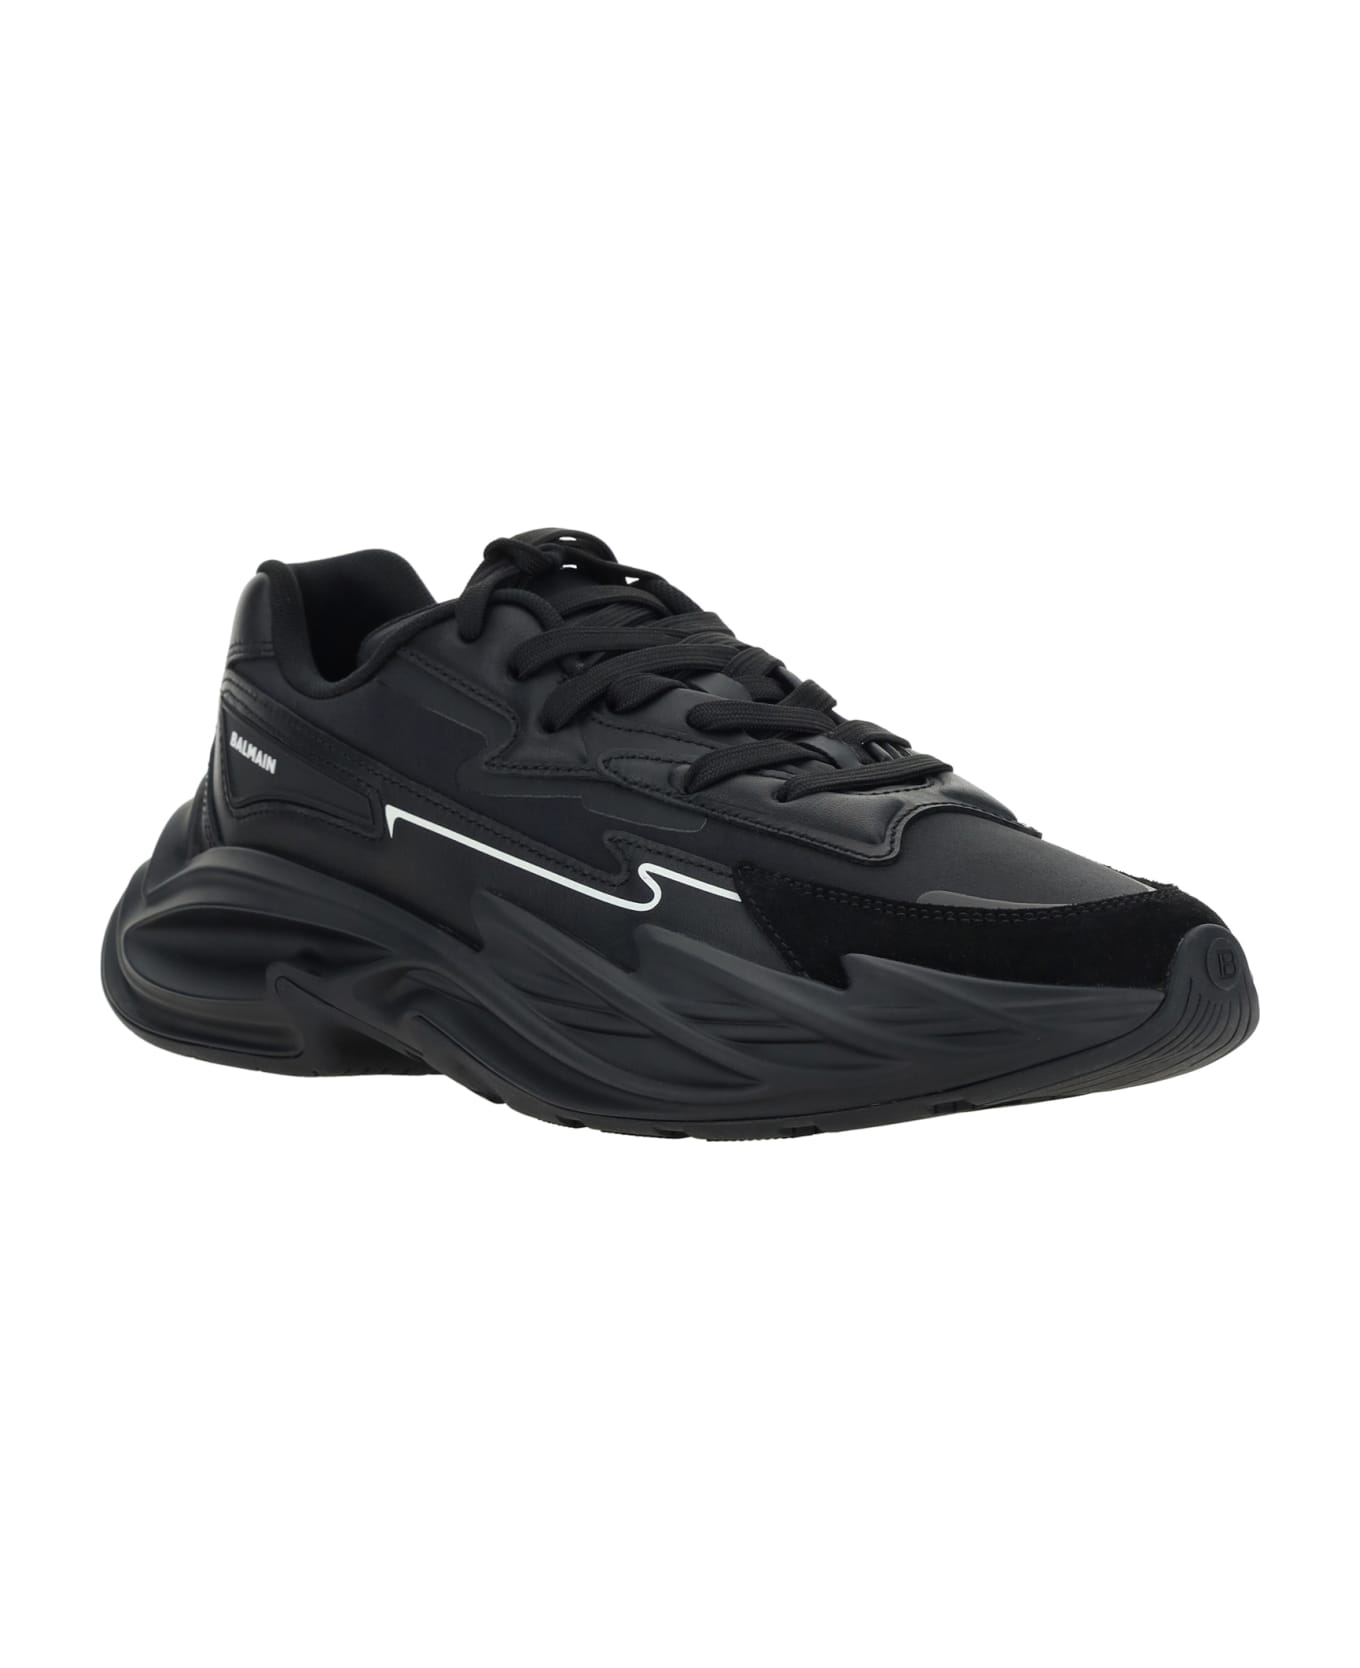 Balmain Run-row Sneakers - 0pa Noir